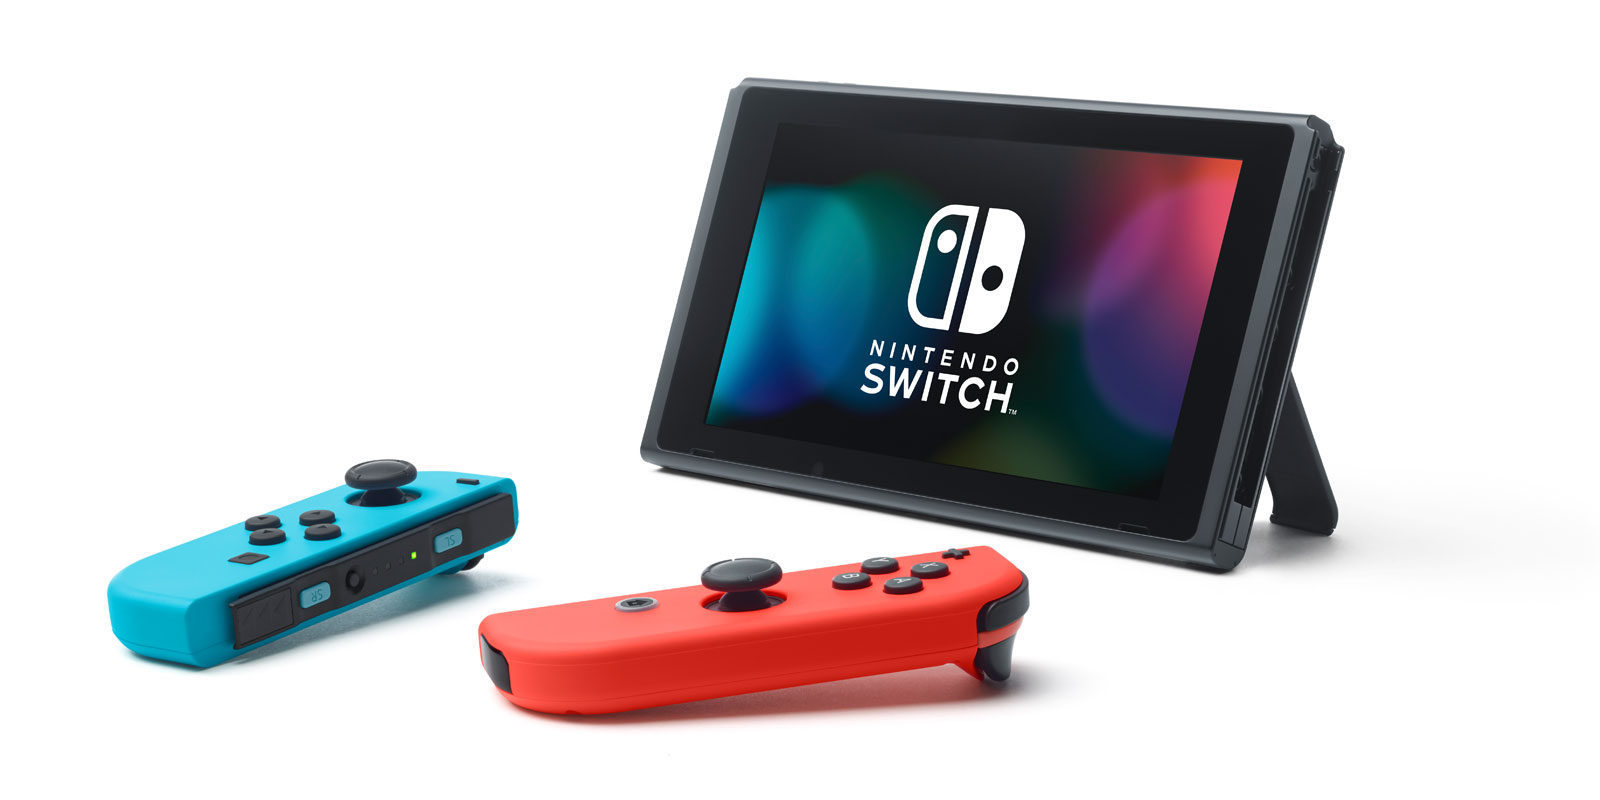 Nintendo Switch admitirá tarjetas microSD de hasta 256 GB